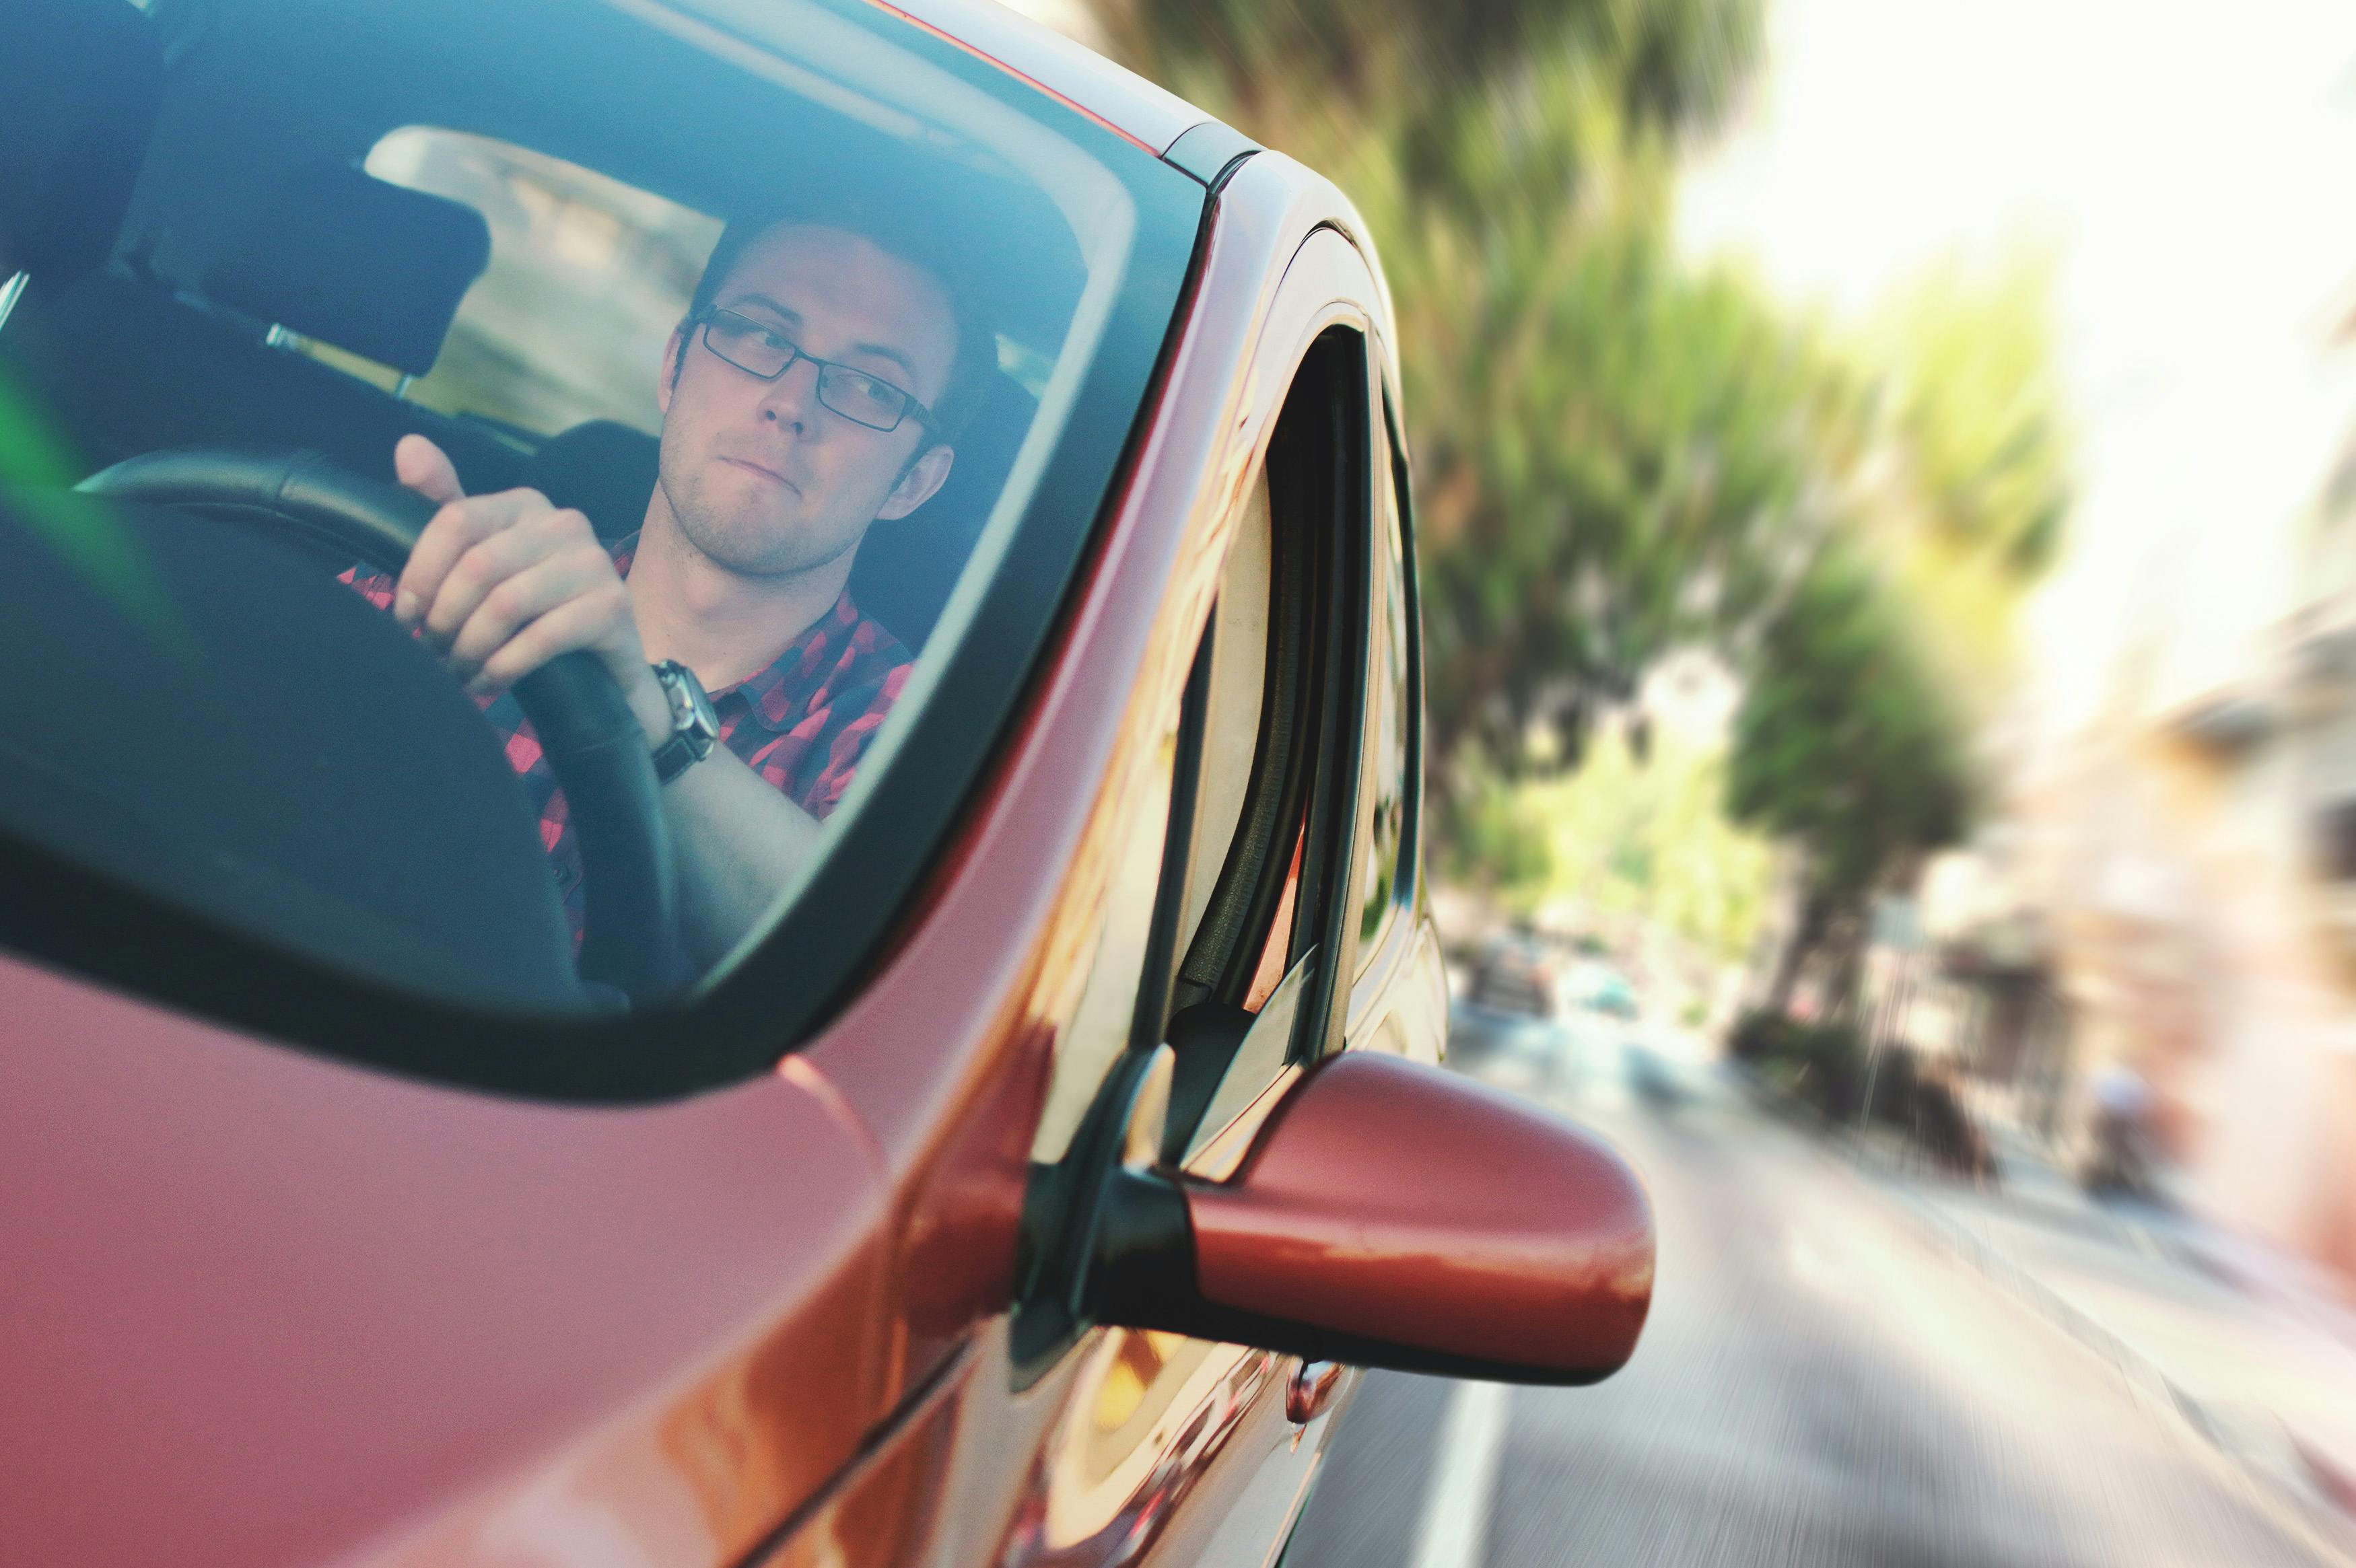 A man driving a red car | Source: Pexels